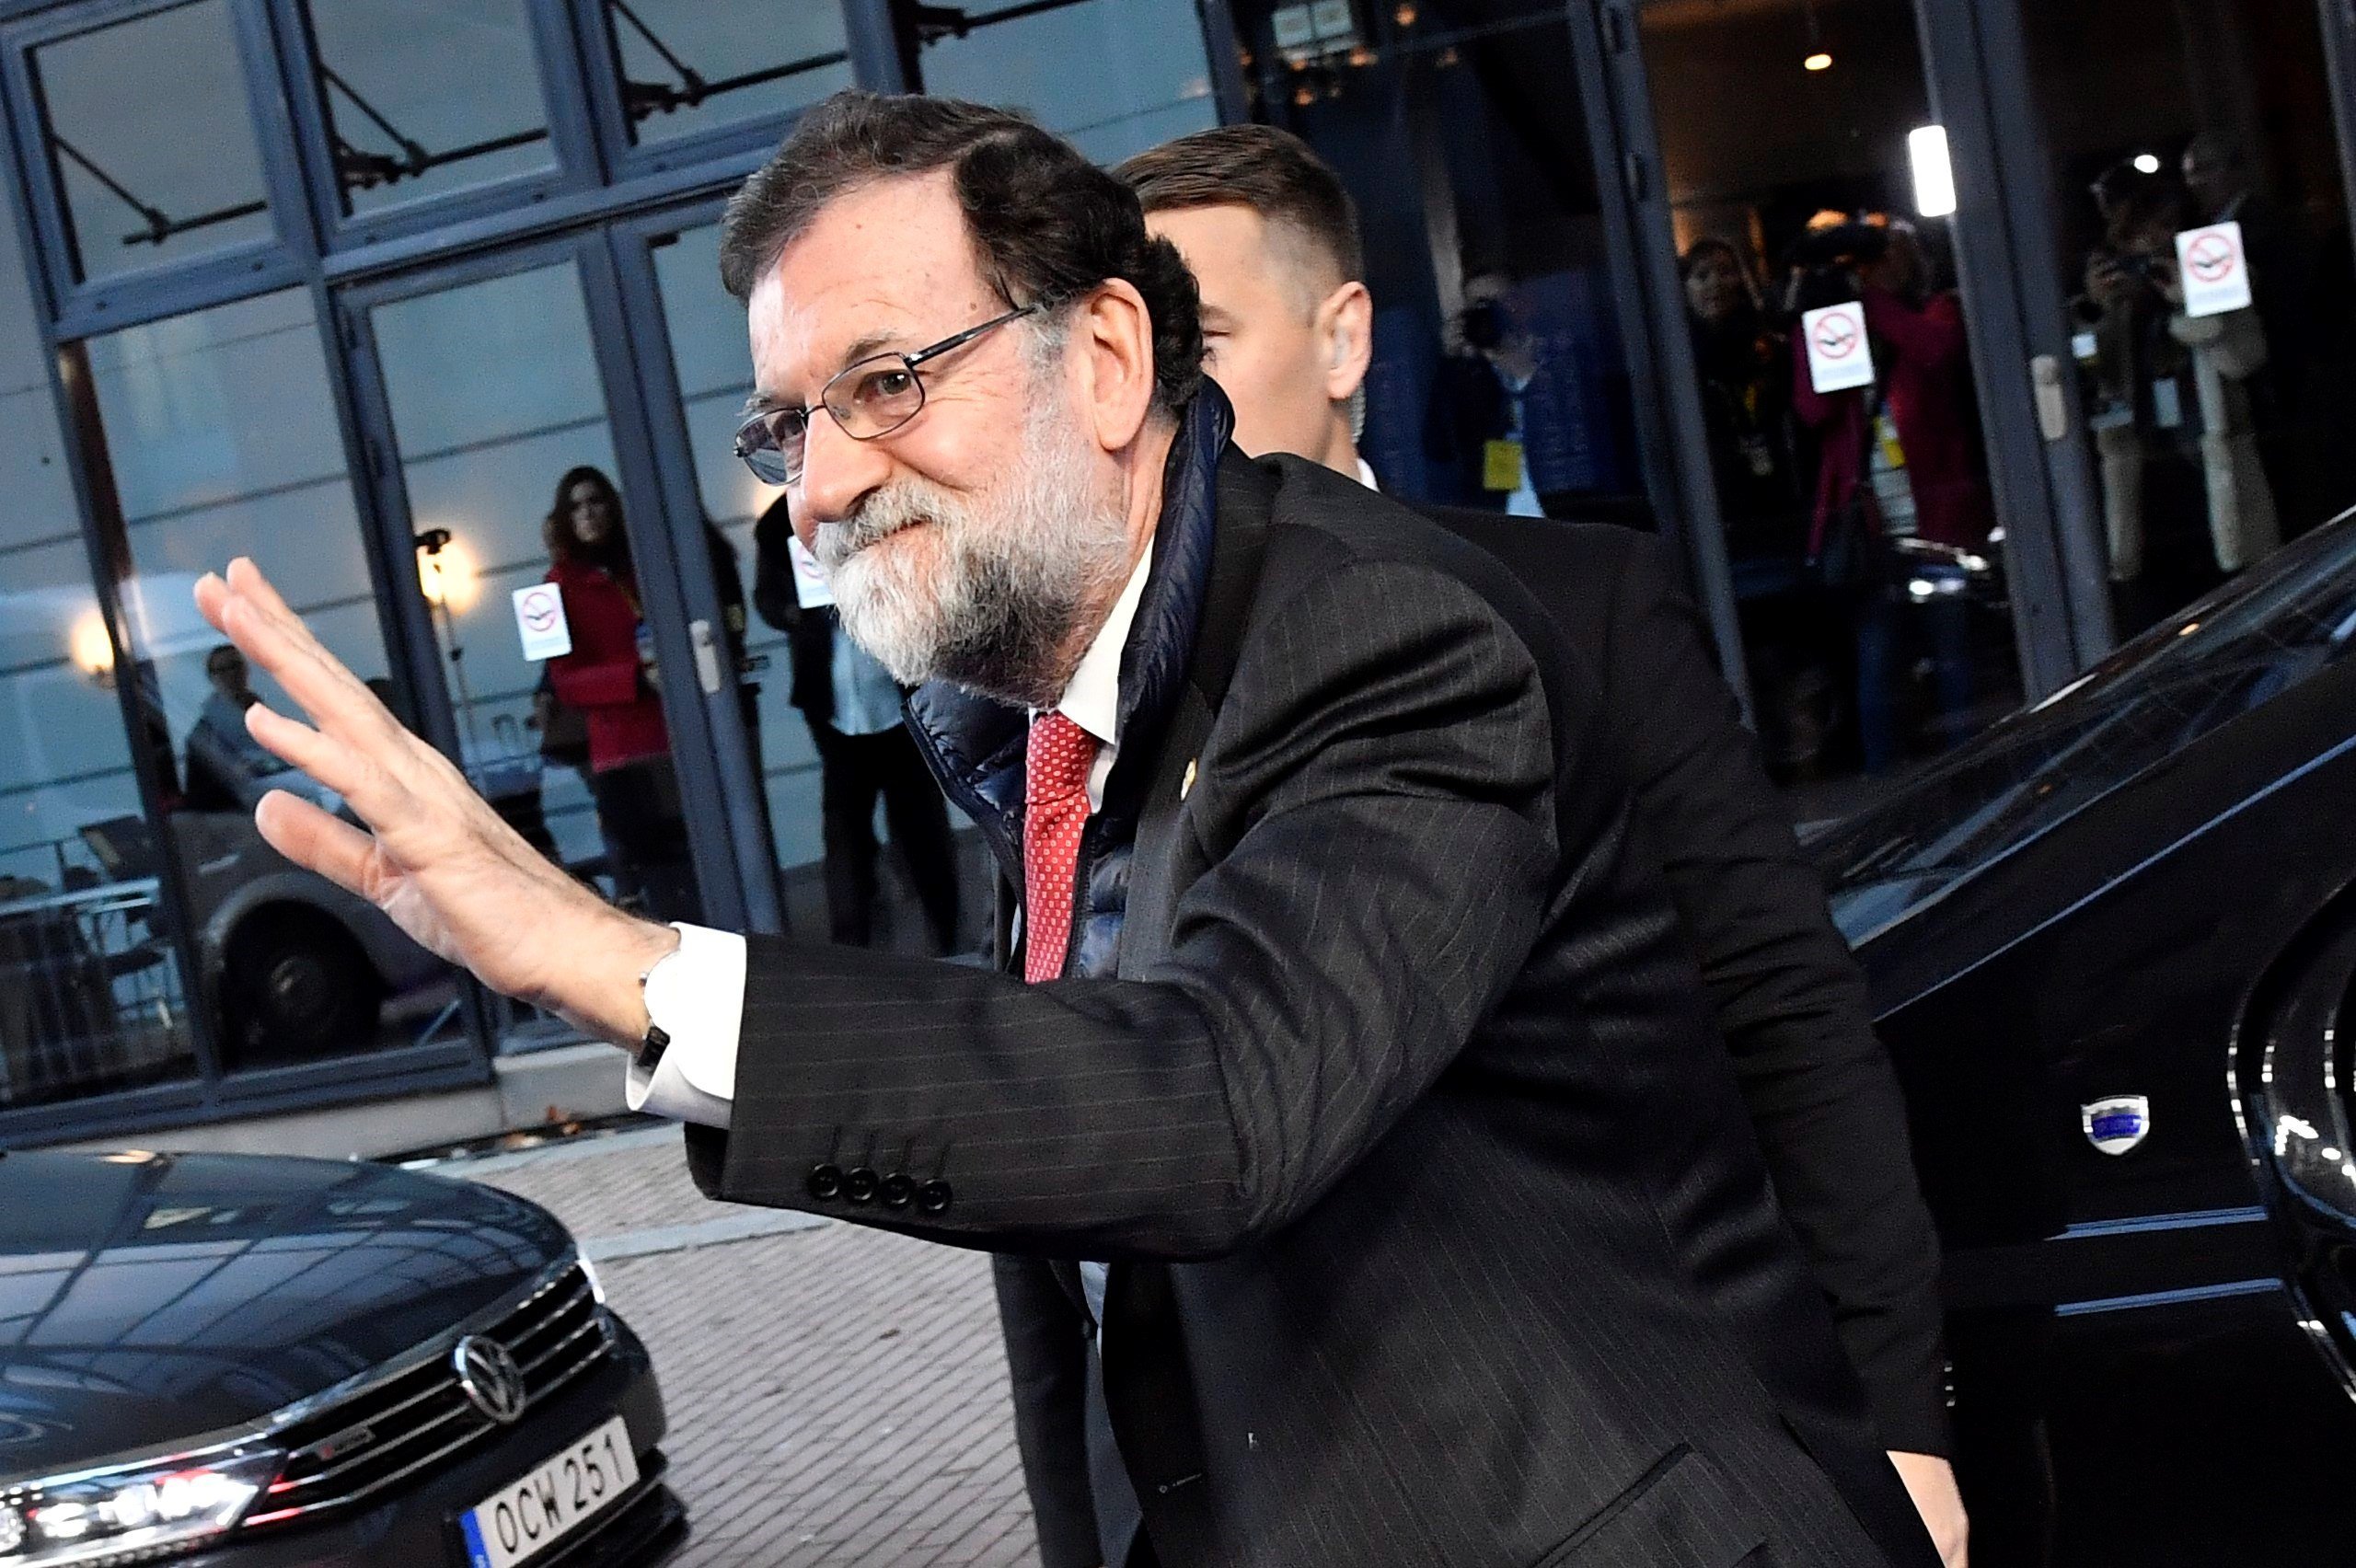 Rajoy: "Jo he salvat Espanya"